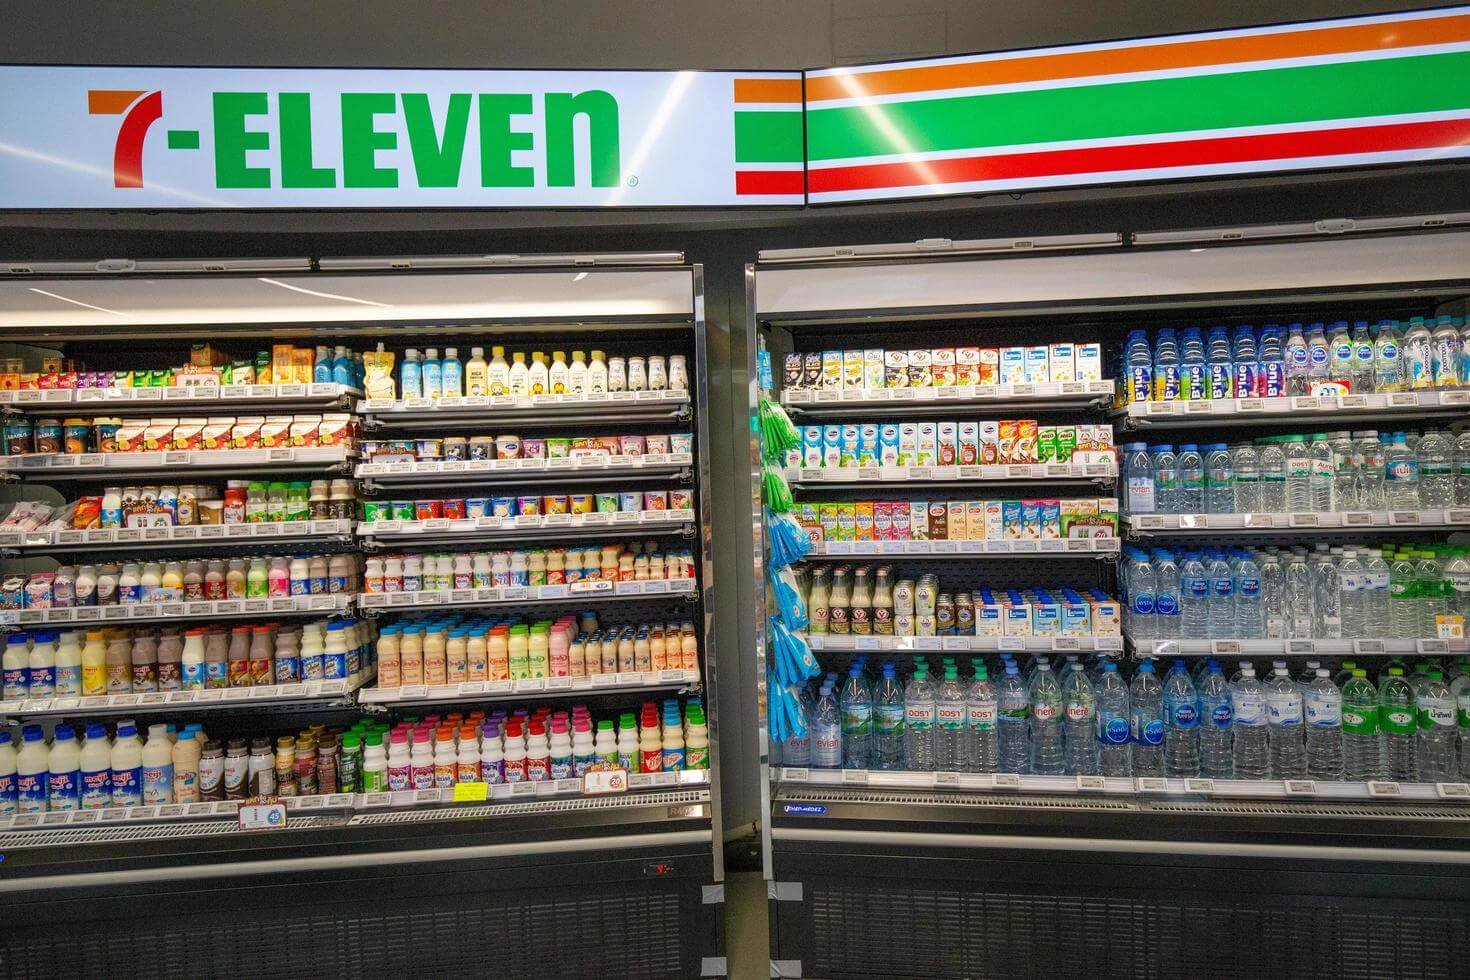 7-Eleven บริษัทแม่ญี่ปุ่น เตรียมขยายสาขาทั่วโลก 100,000 สาขา ในปี 2030